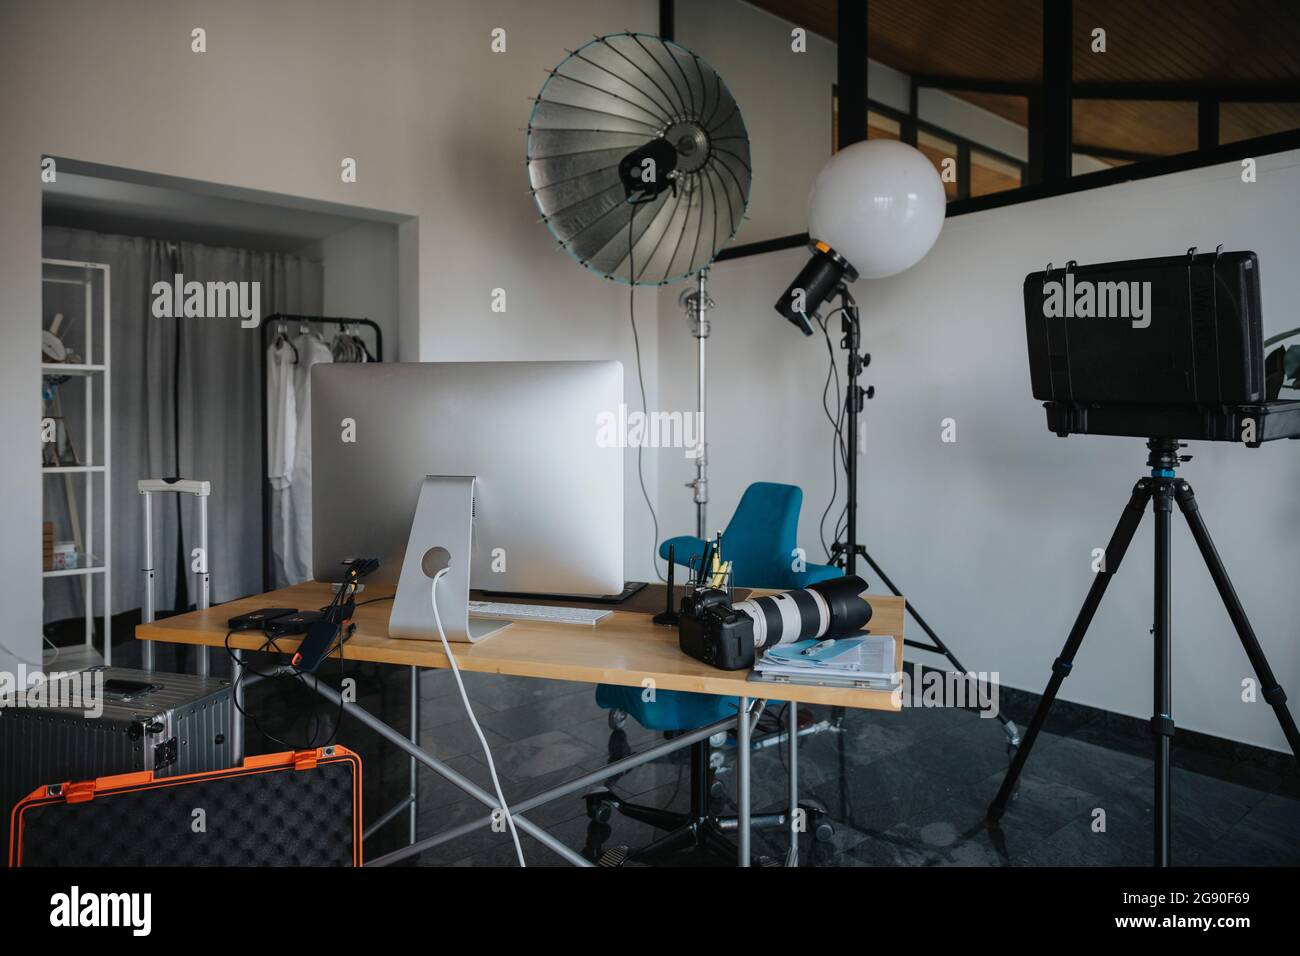 Empty studio with photography equipment at desk Stock Photo